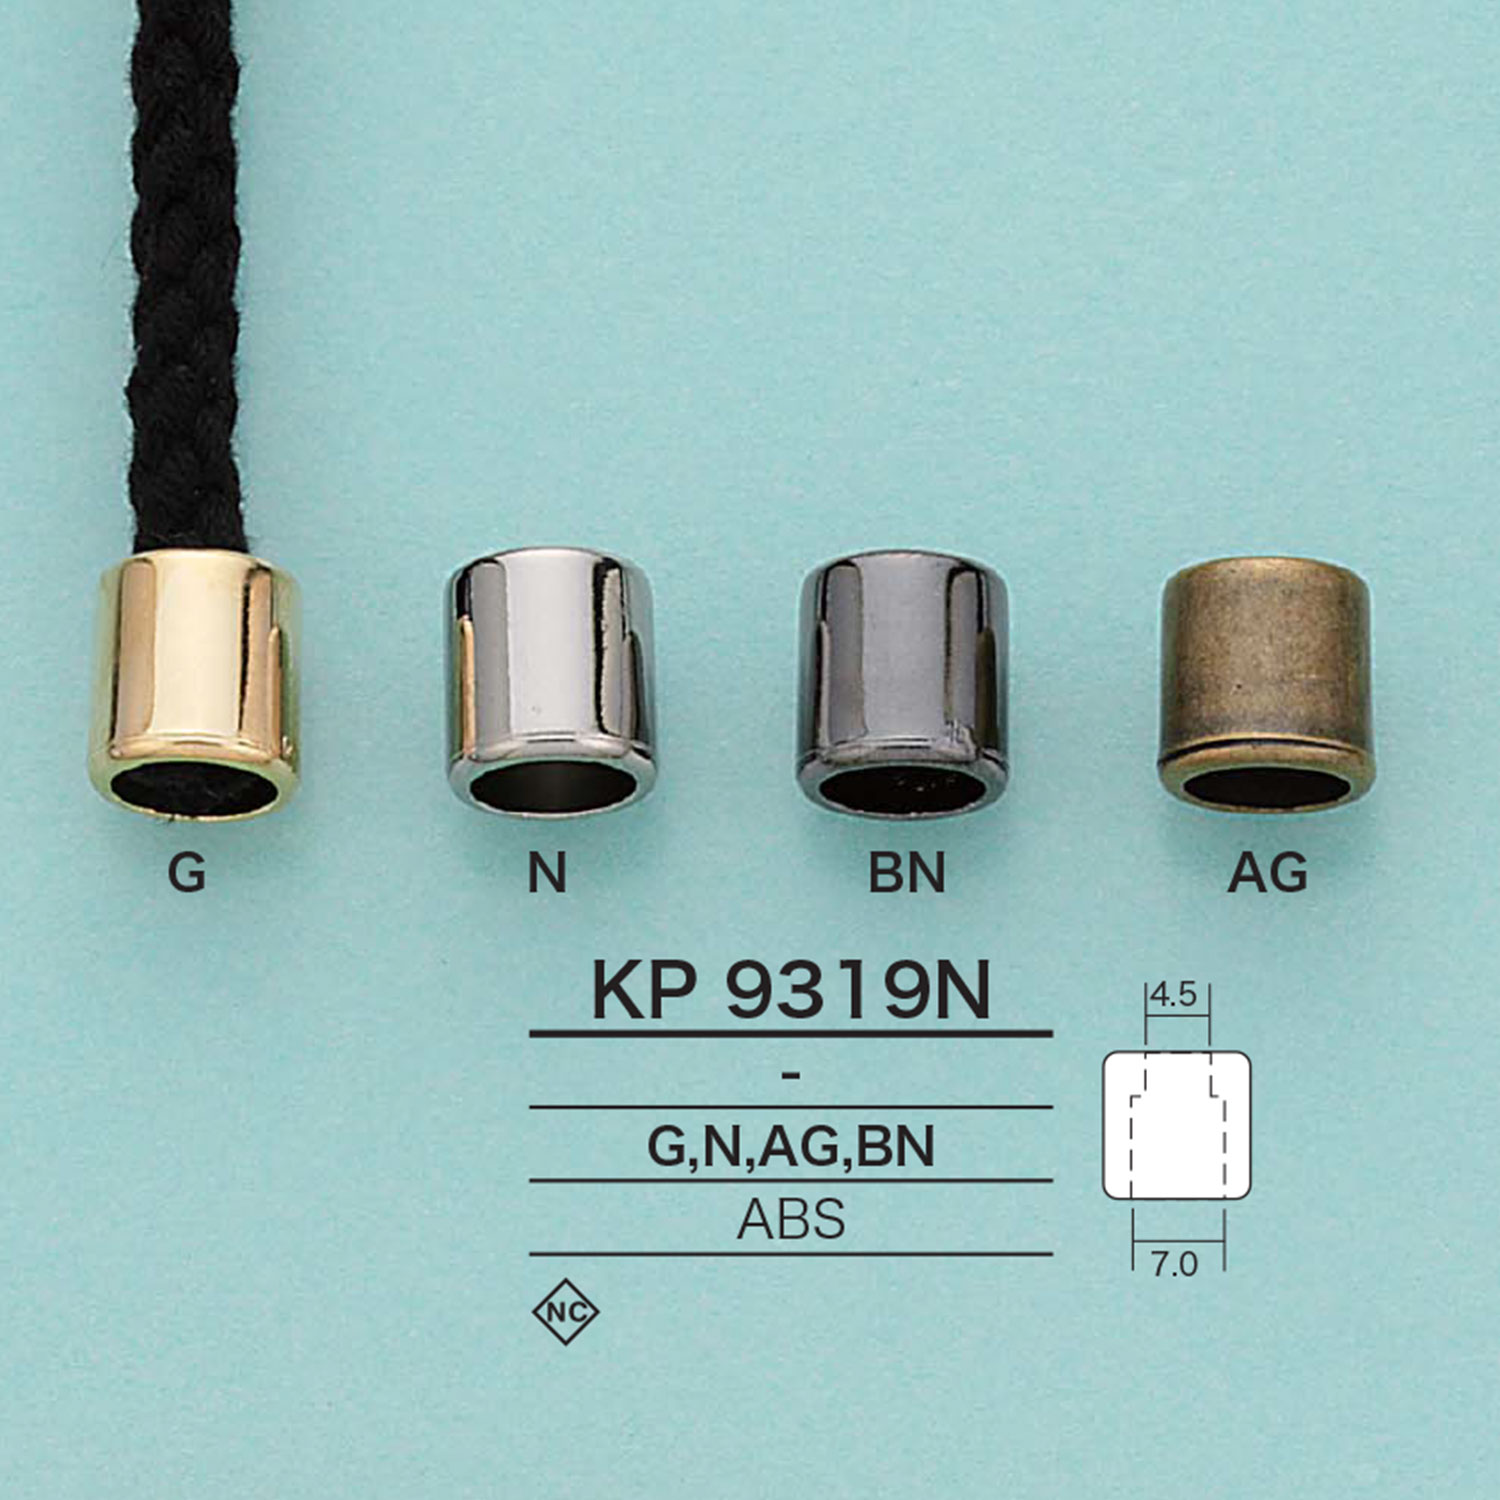 KP9319N 筒型コードエンド(メッキ加工)[バックル・カン類] アイリス